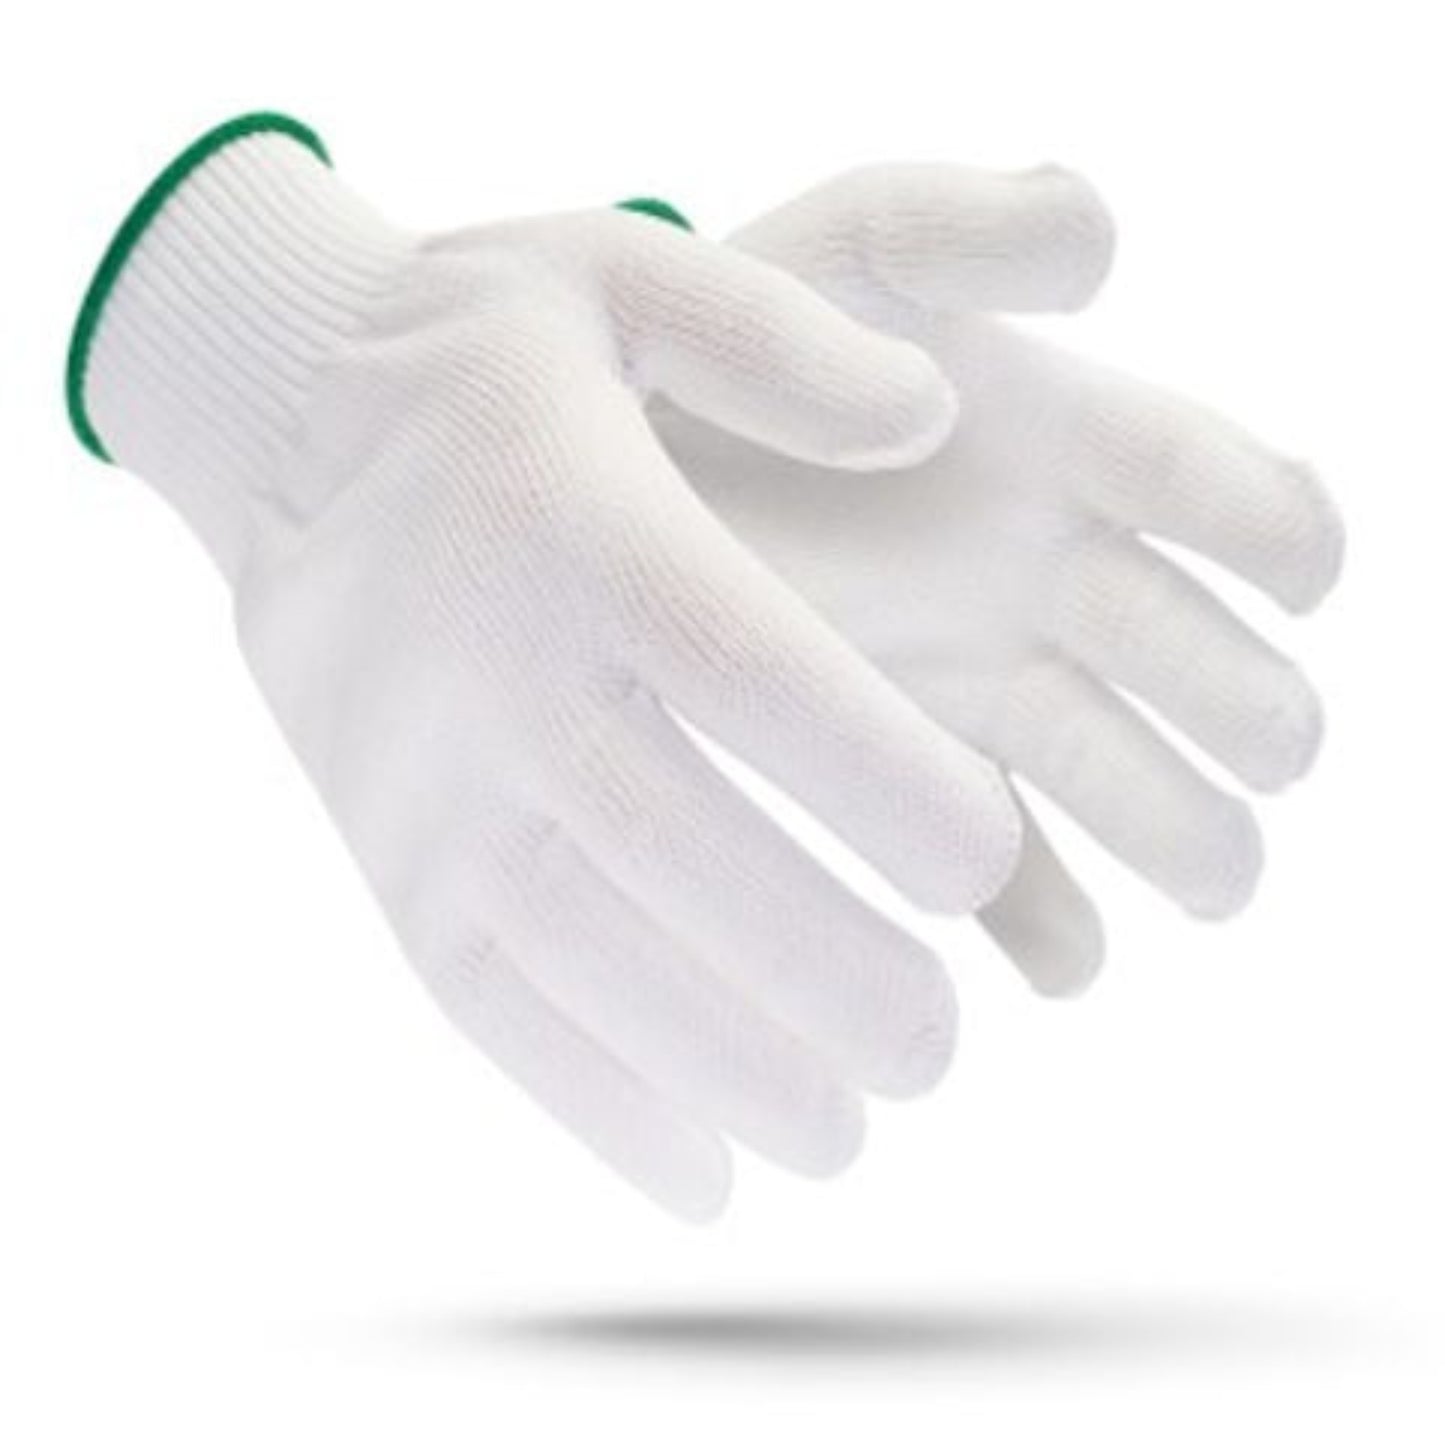 13 Gauge Electrostatic Dissipative Glove